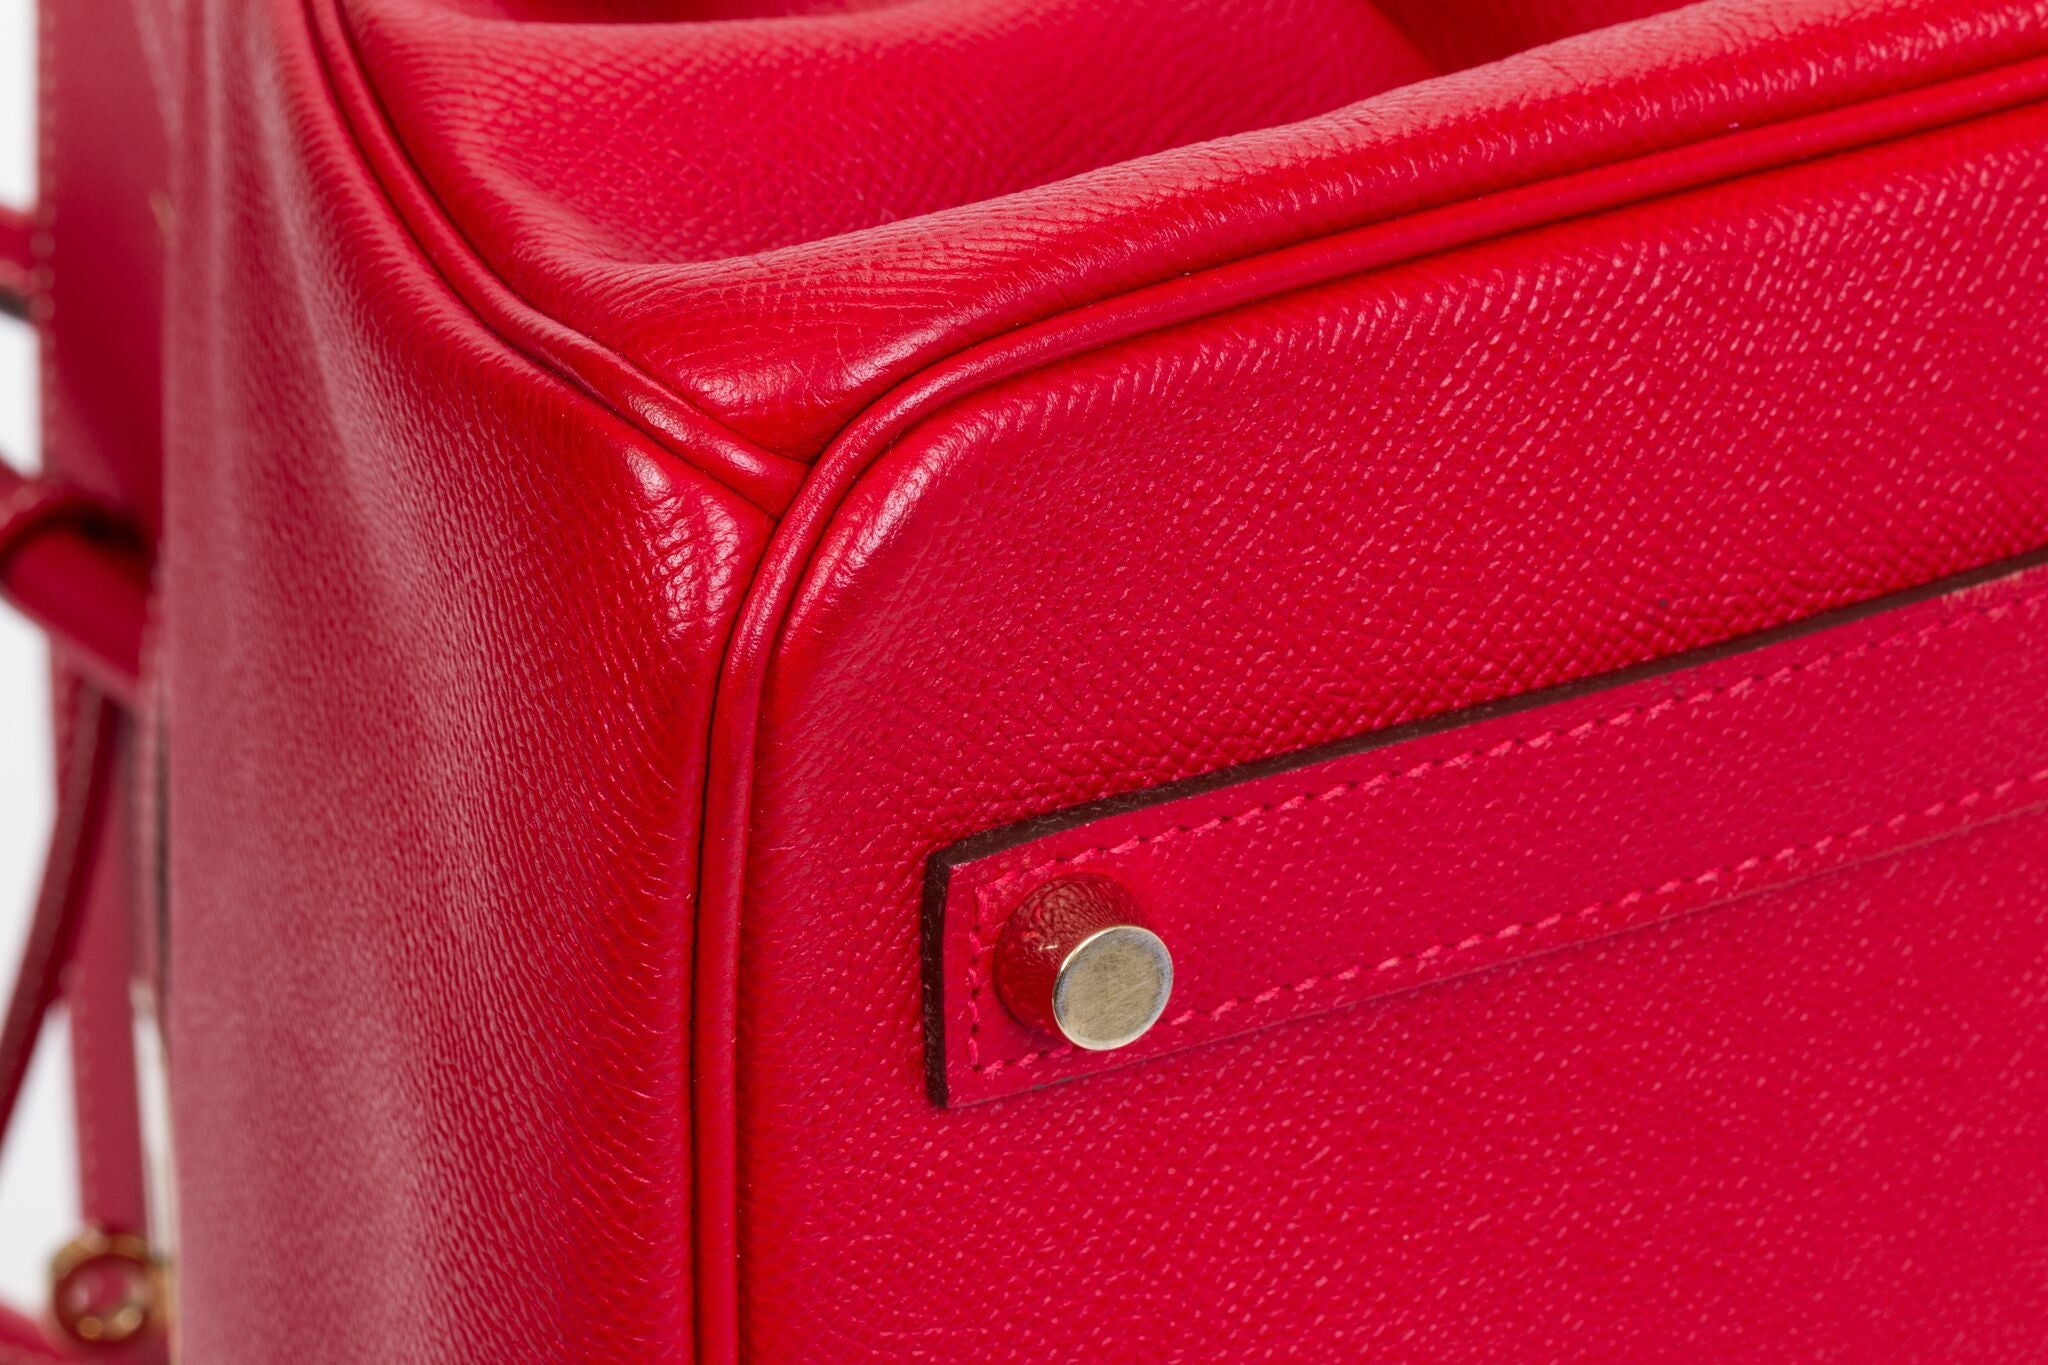 Hermès Birkin Bag 35cm Candy Rouge Casaque/Bleu Thalassa Epsom w/GHW_2012